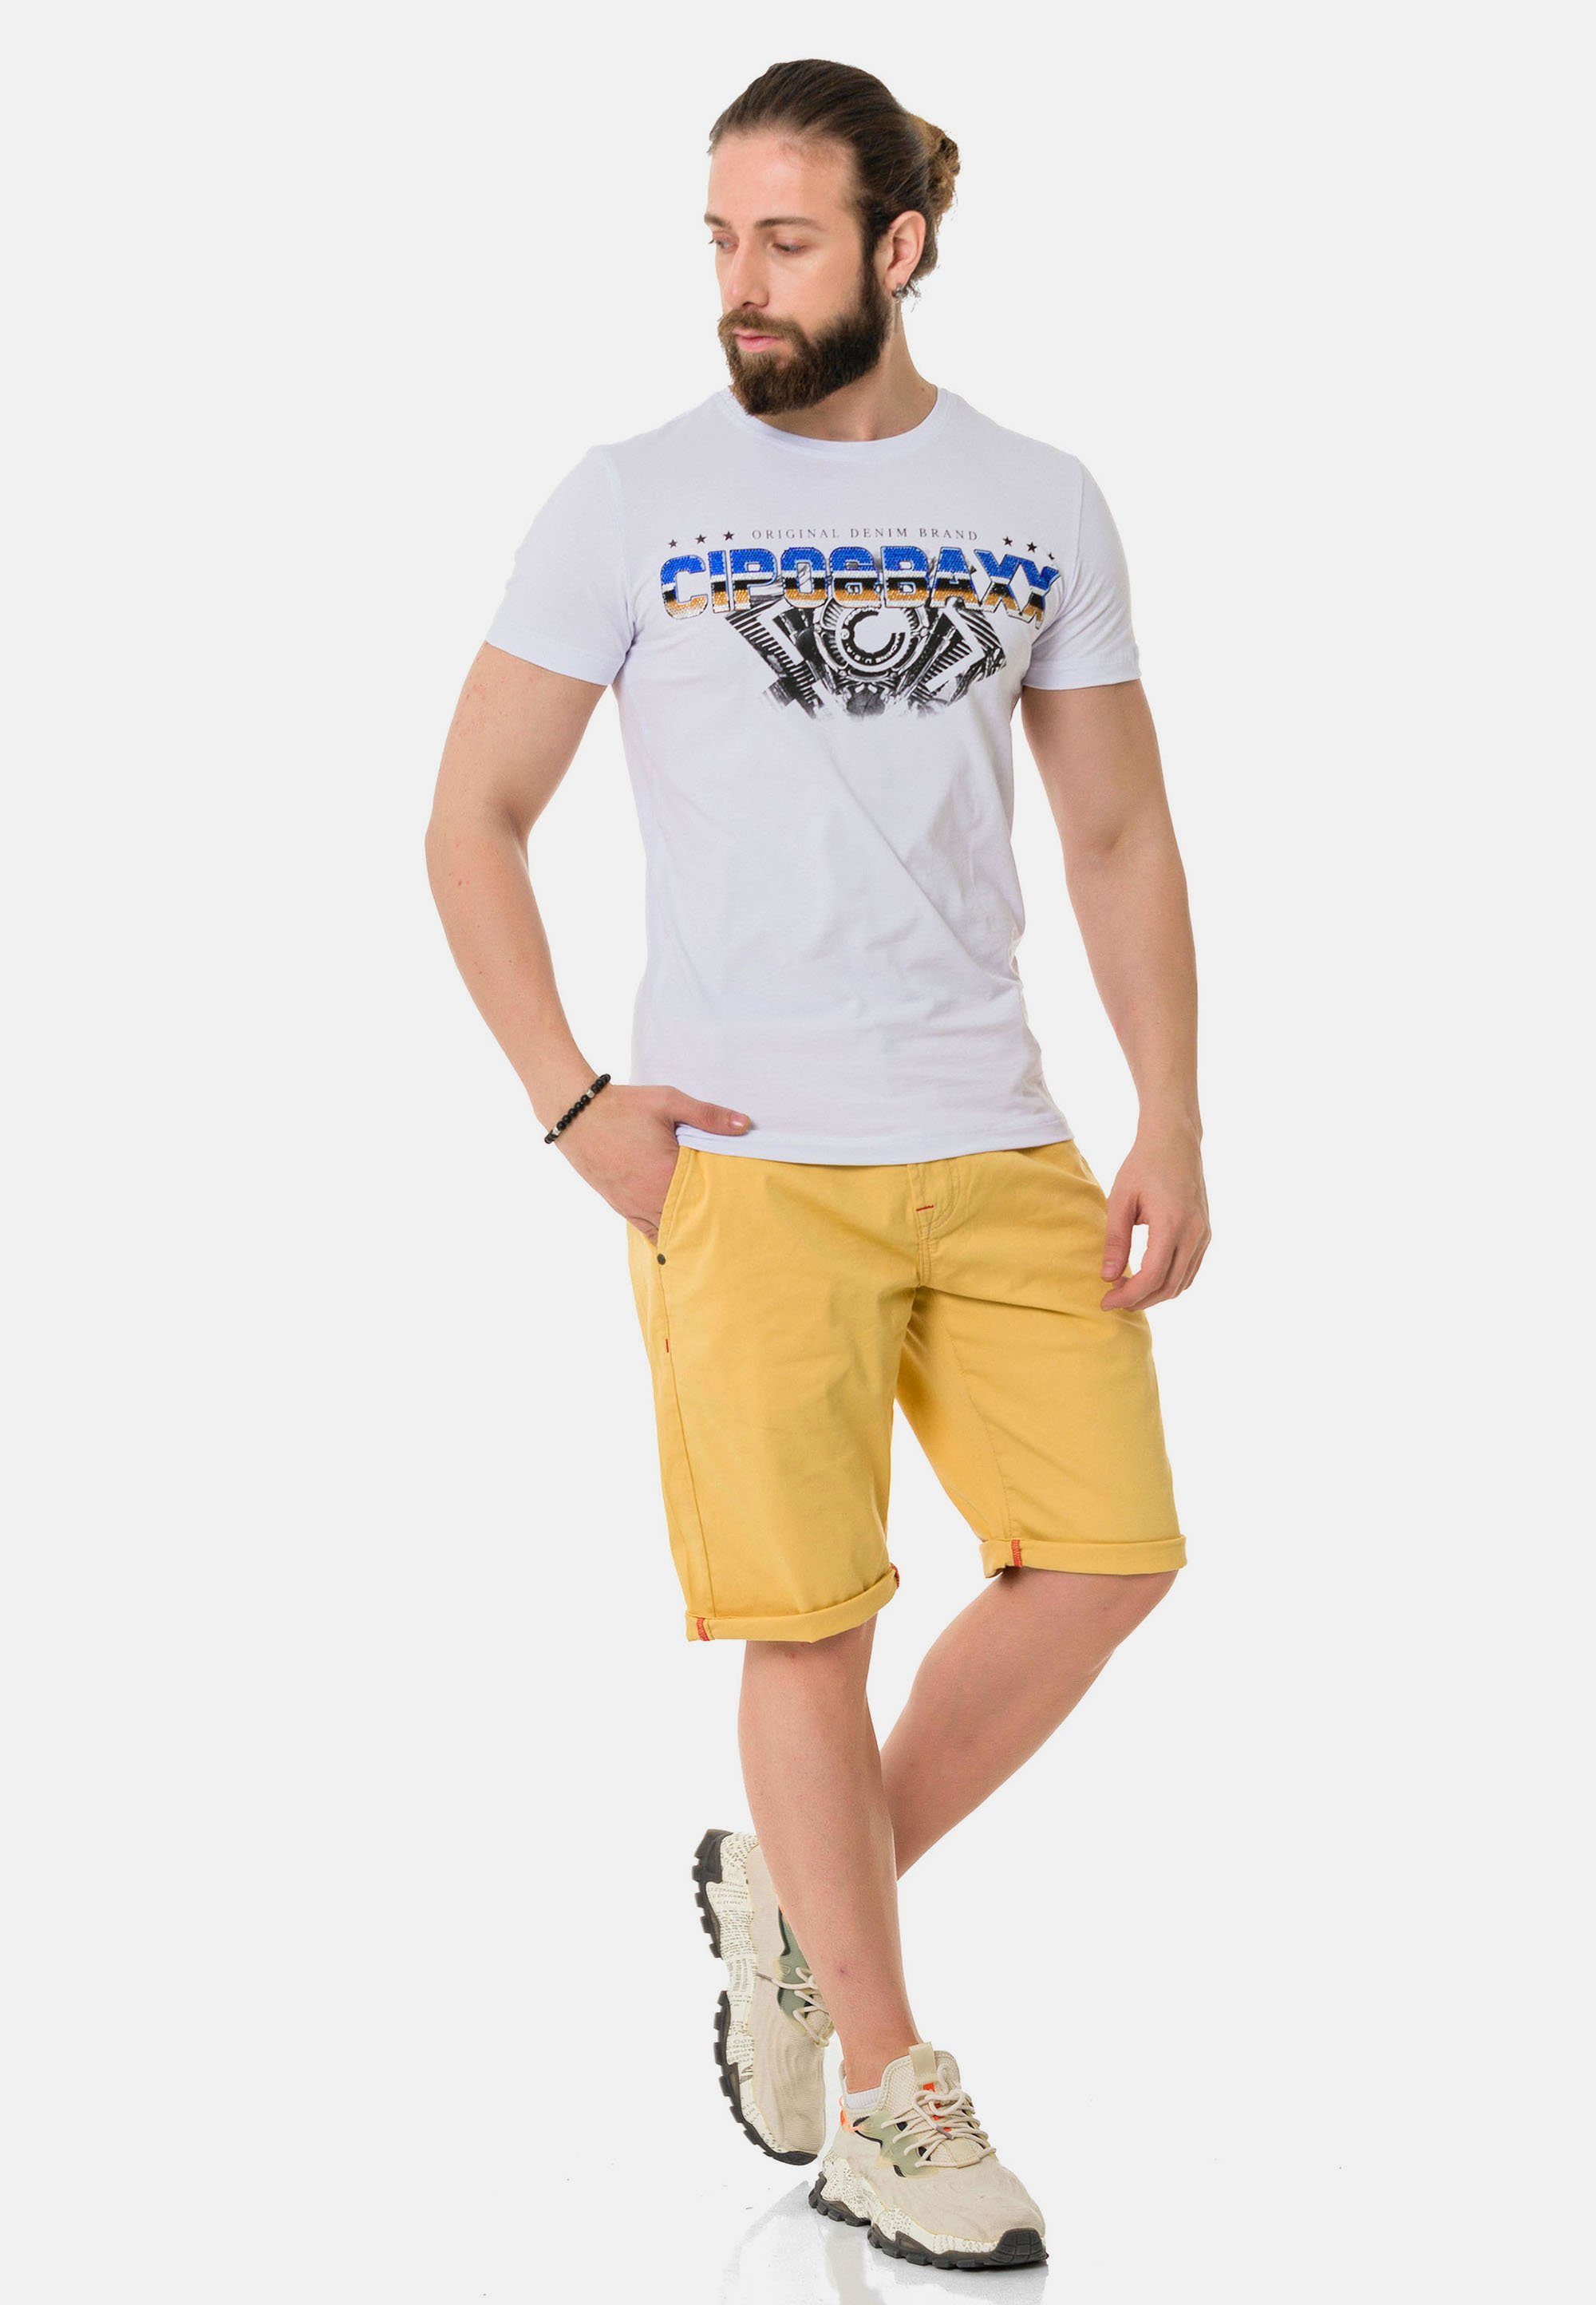 weiß Baxx & T-Shirt Marken-Schriftzug mit trendigem Cipo